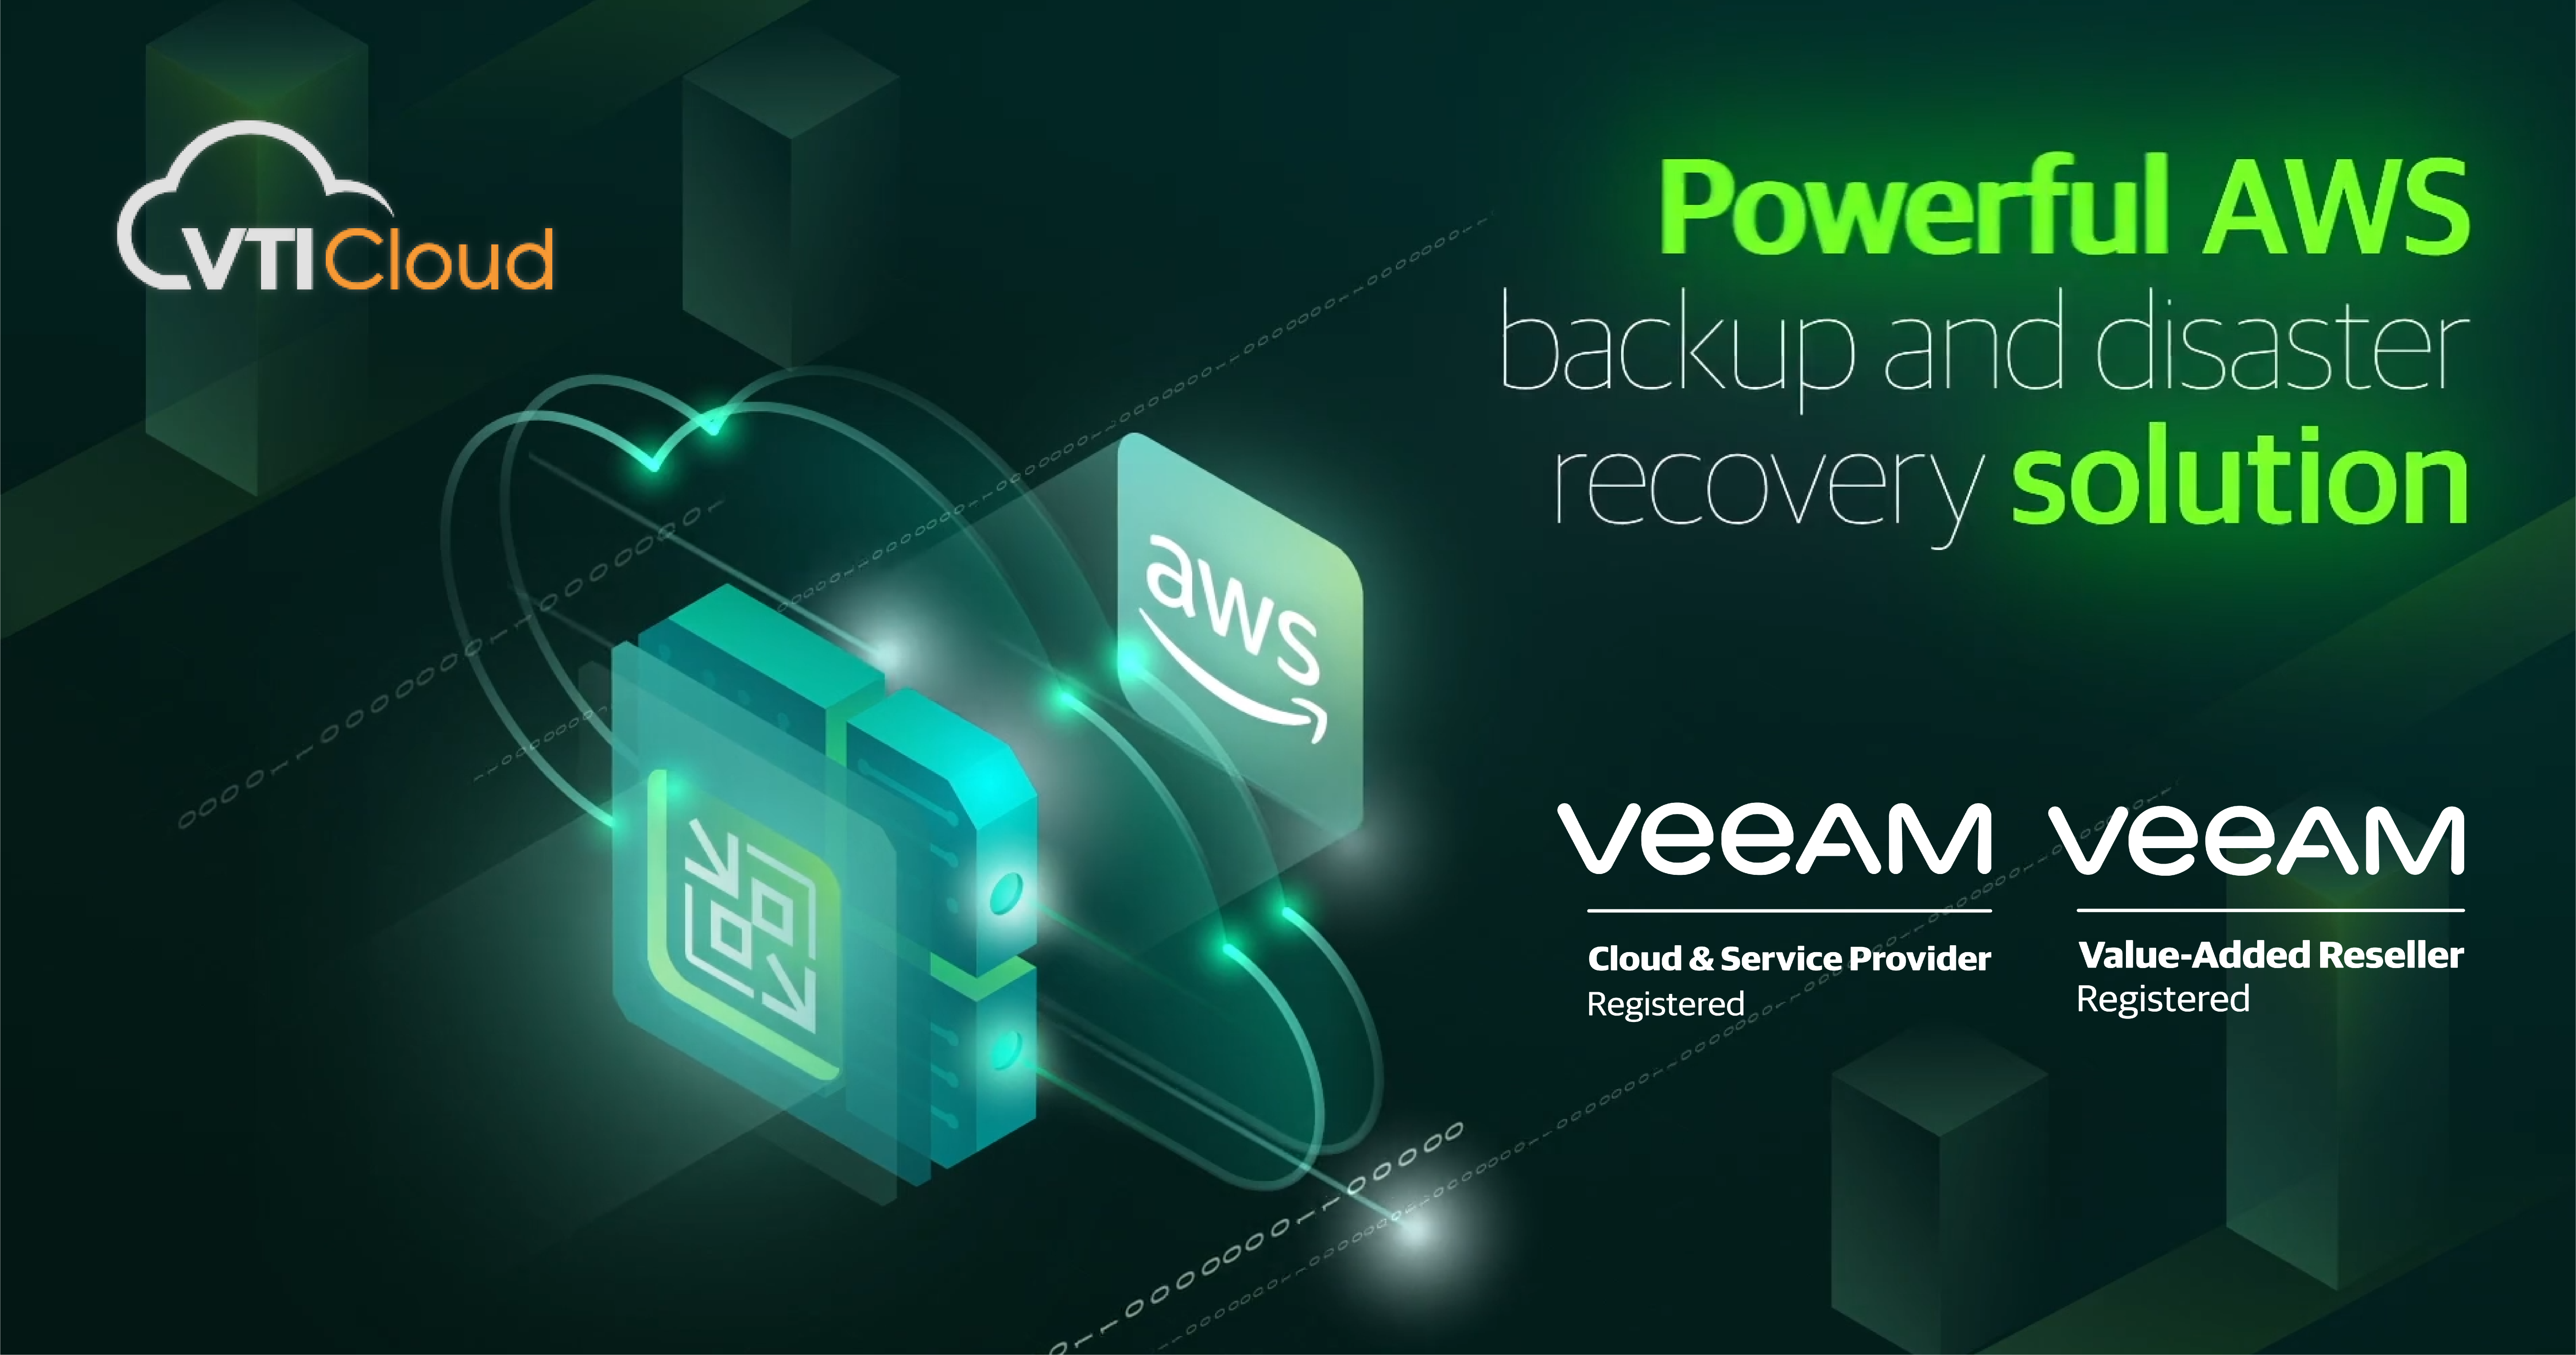 Veeam-VTI-Cloud-partnership